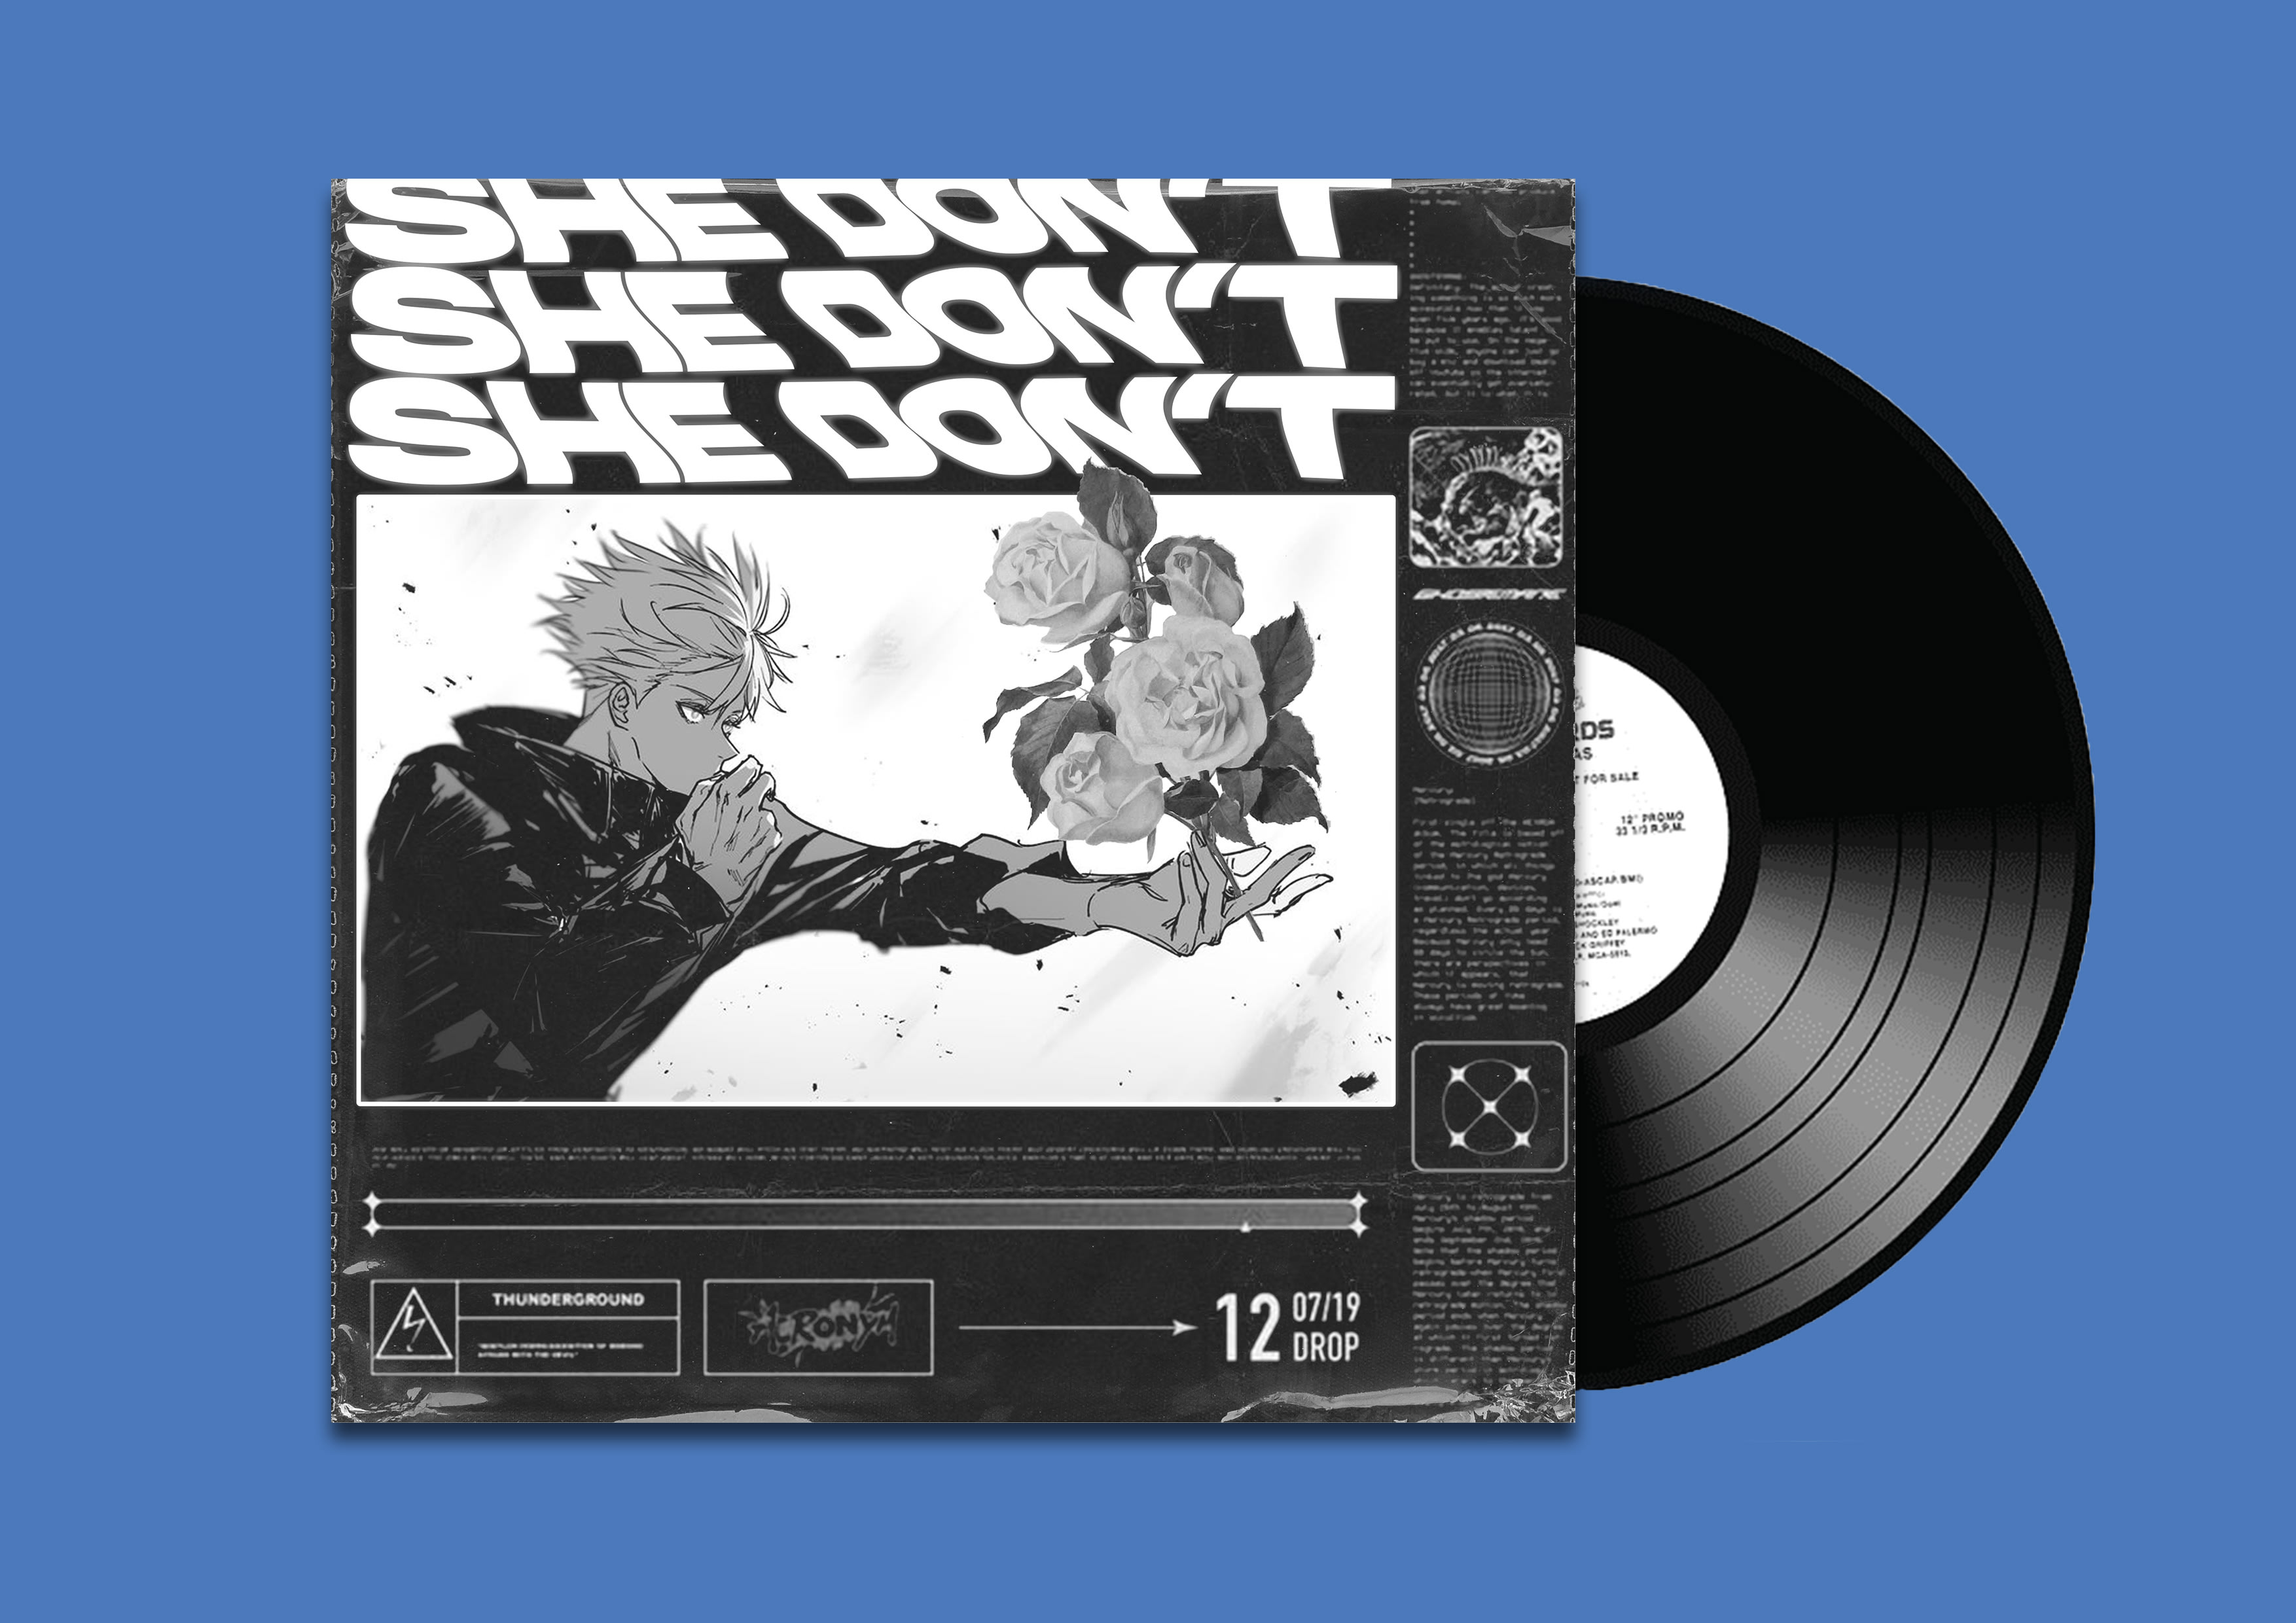 Placeit - Dark Rap Album Maker Featuring an Anime-Style Owl Illustration